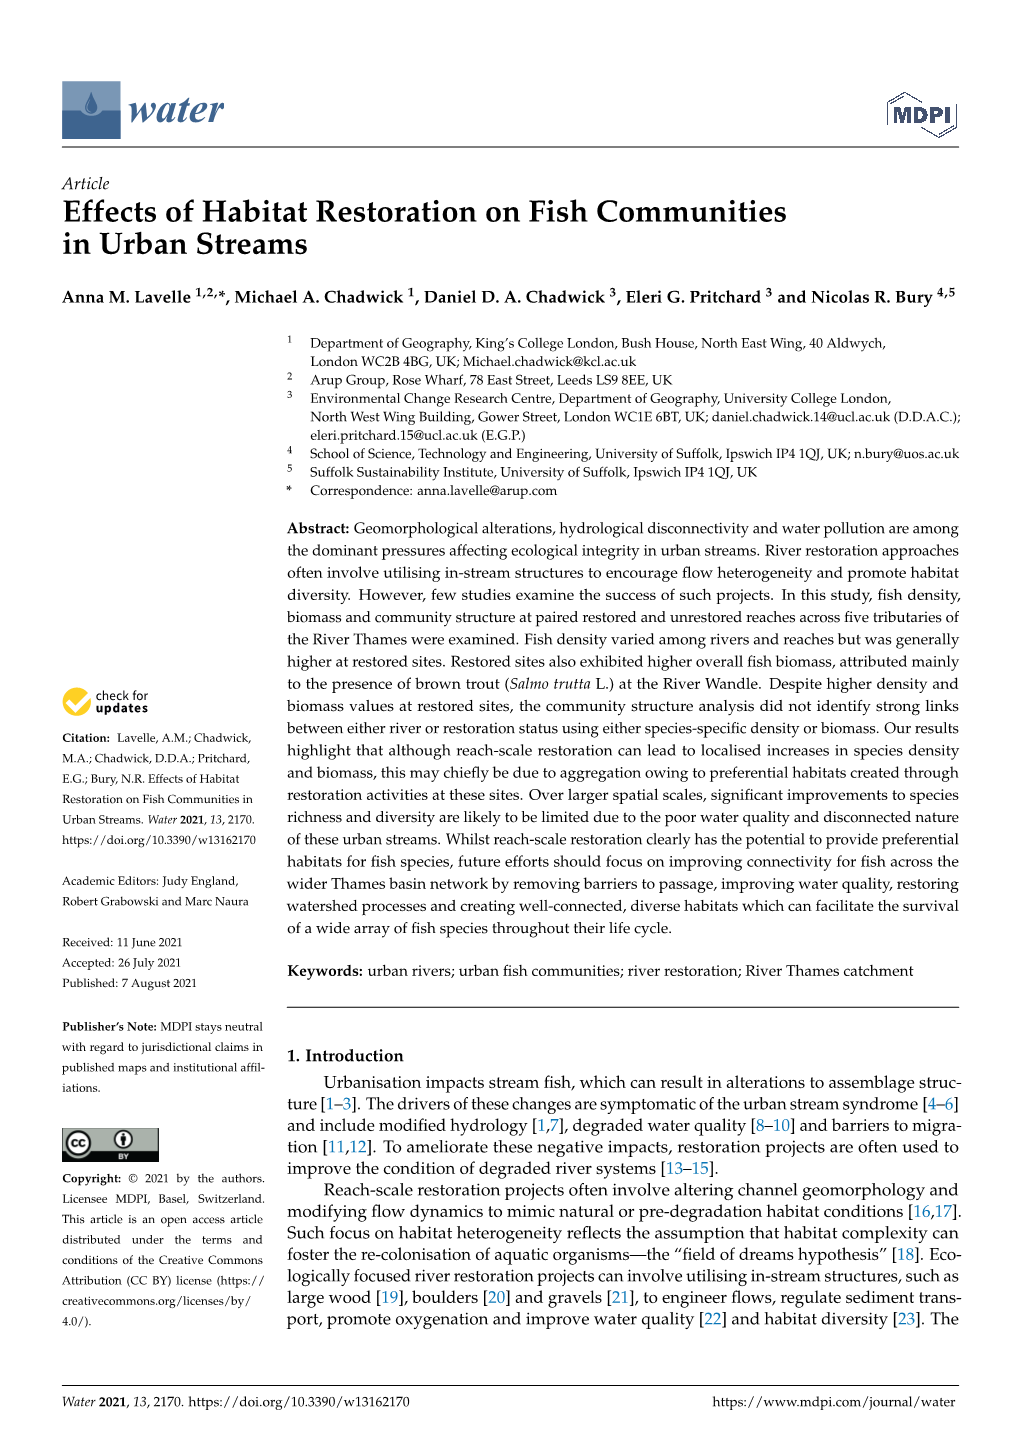 Effects of Habitat Restoration on Fish Communities in Urban Streams